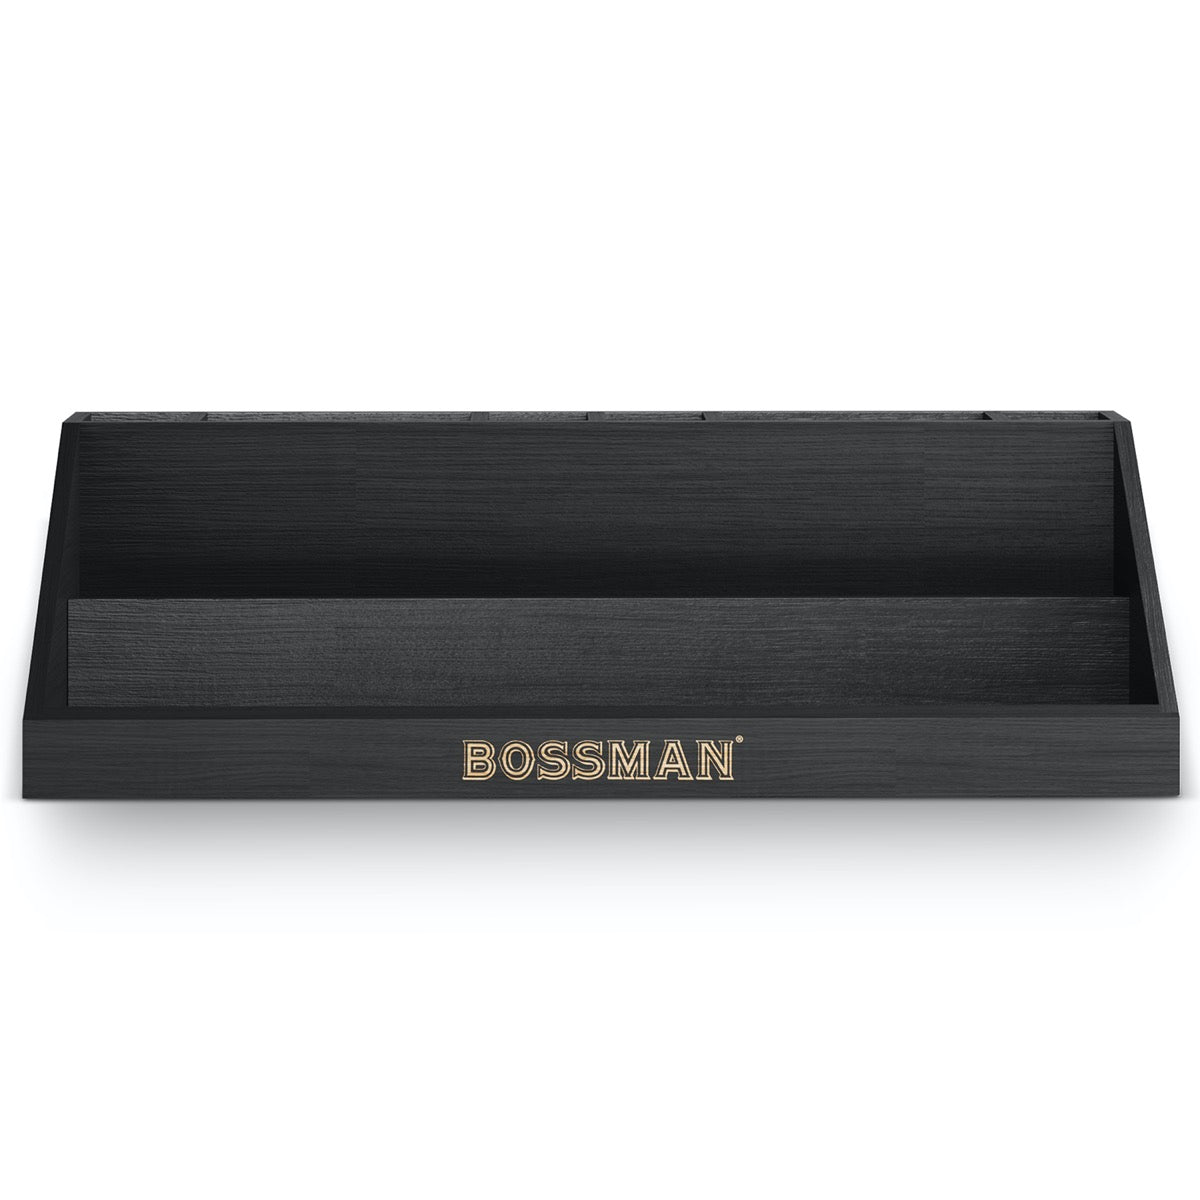 Bossman Organizer Bossman Brands